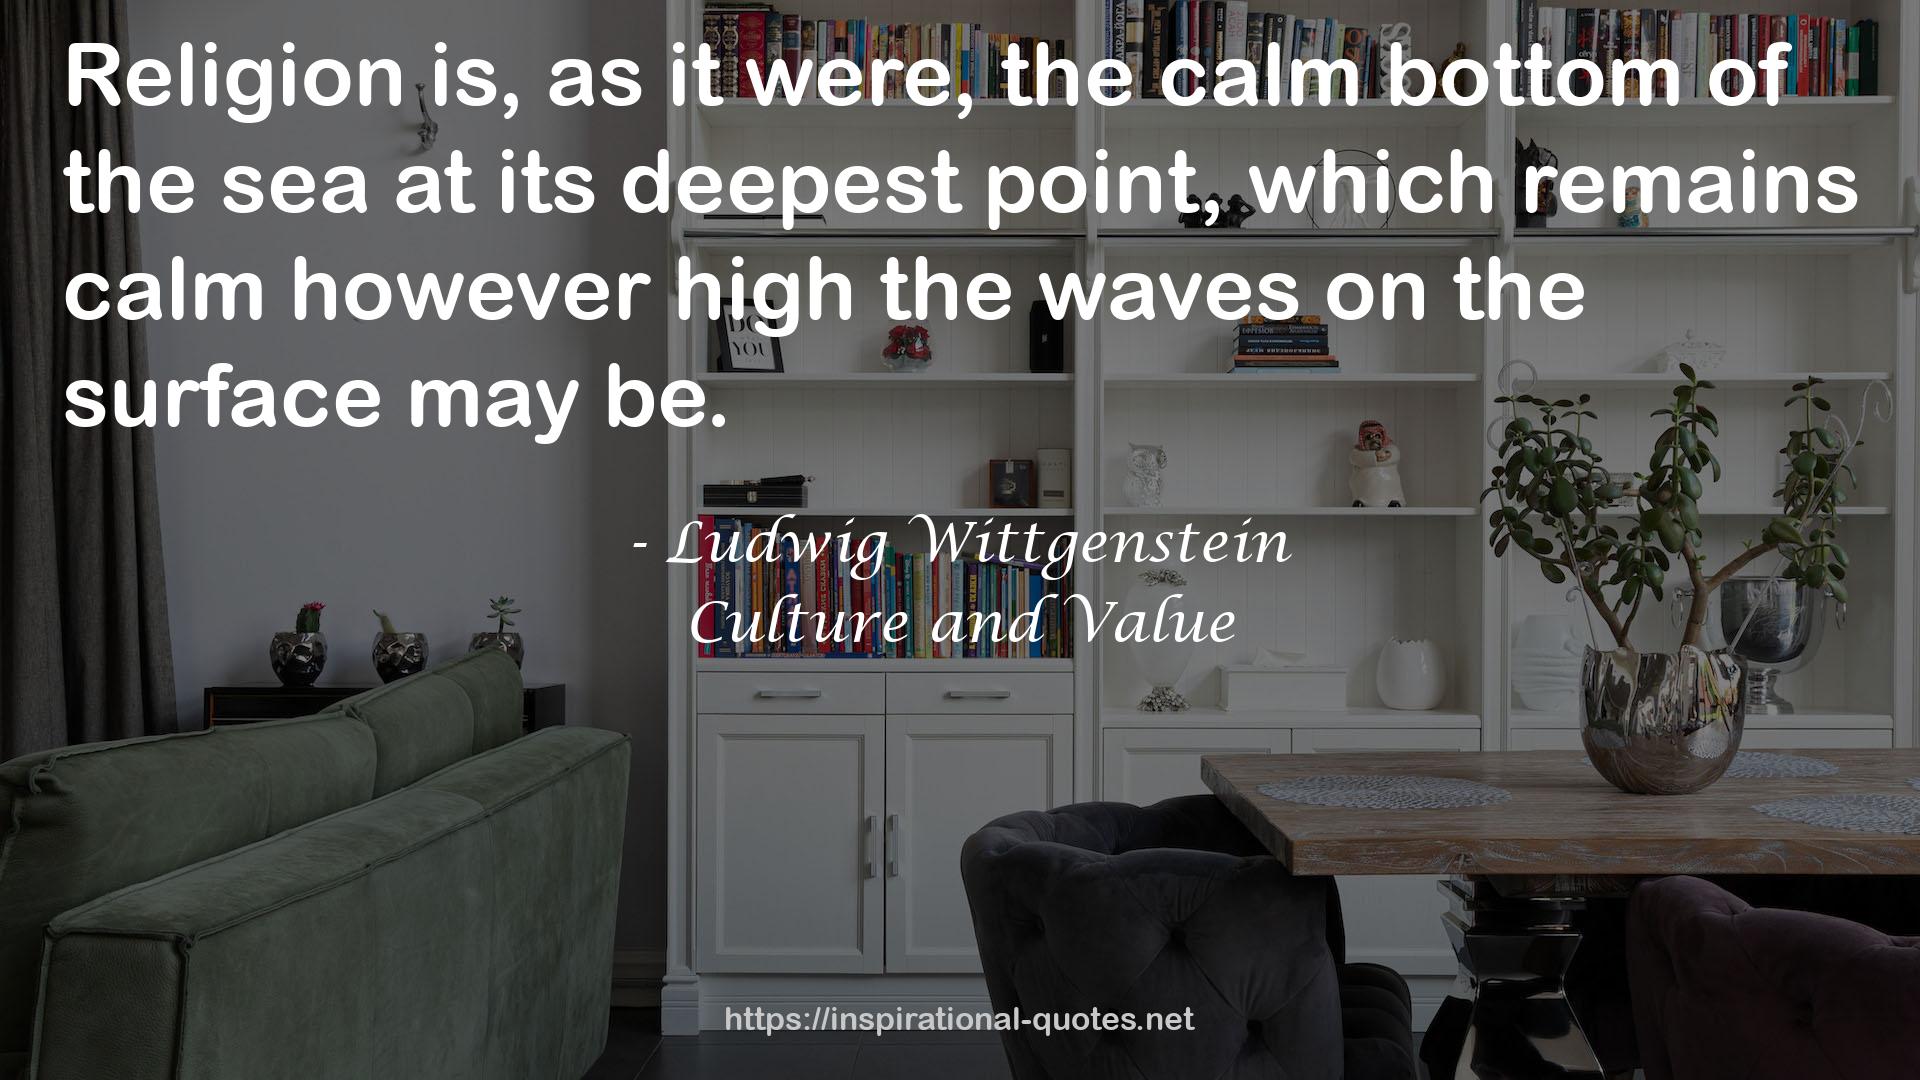 Ludwig Wittgenstein QUOTES